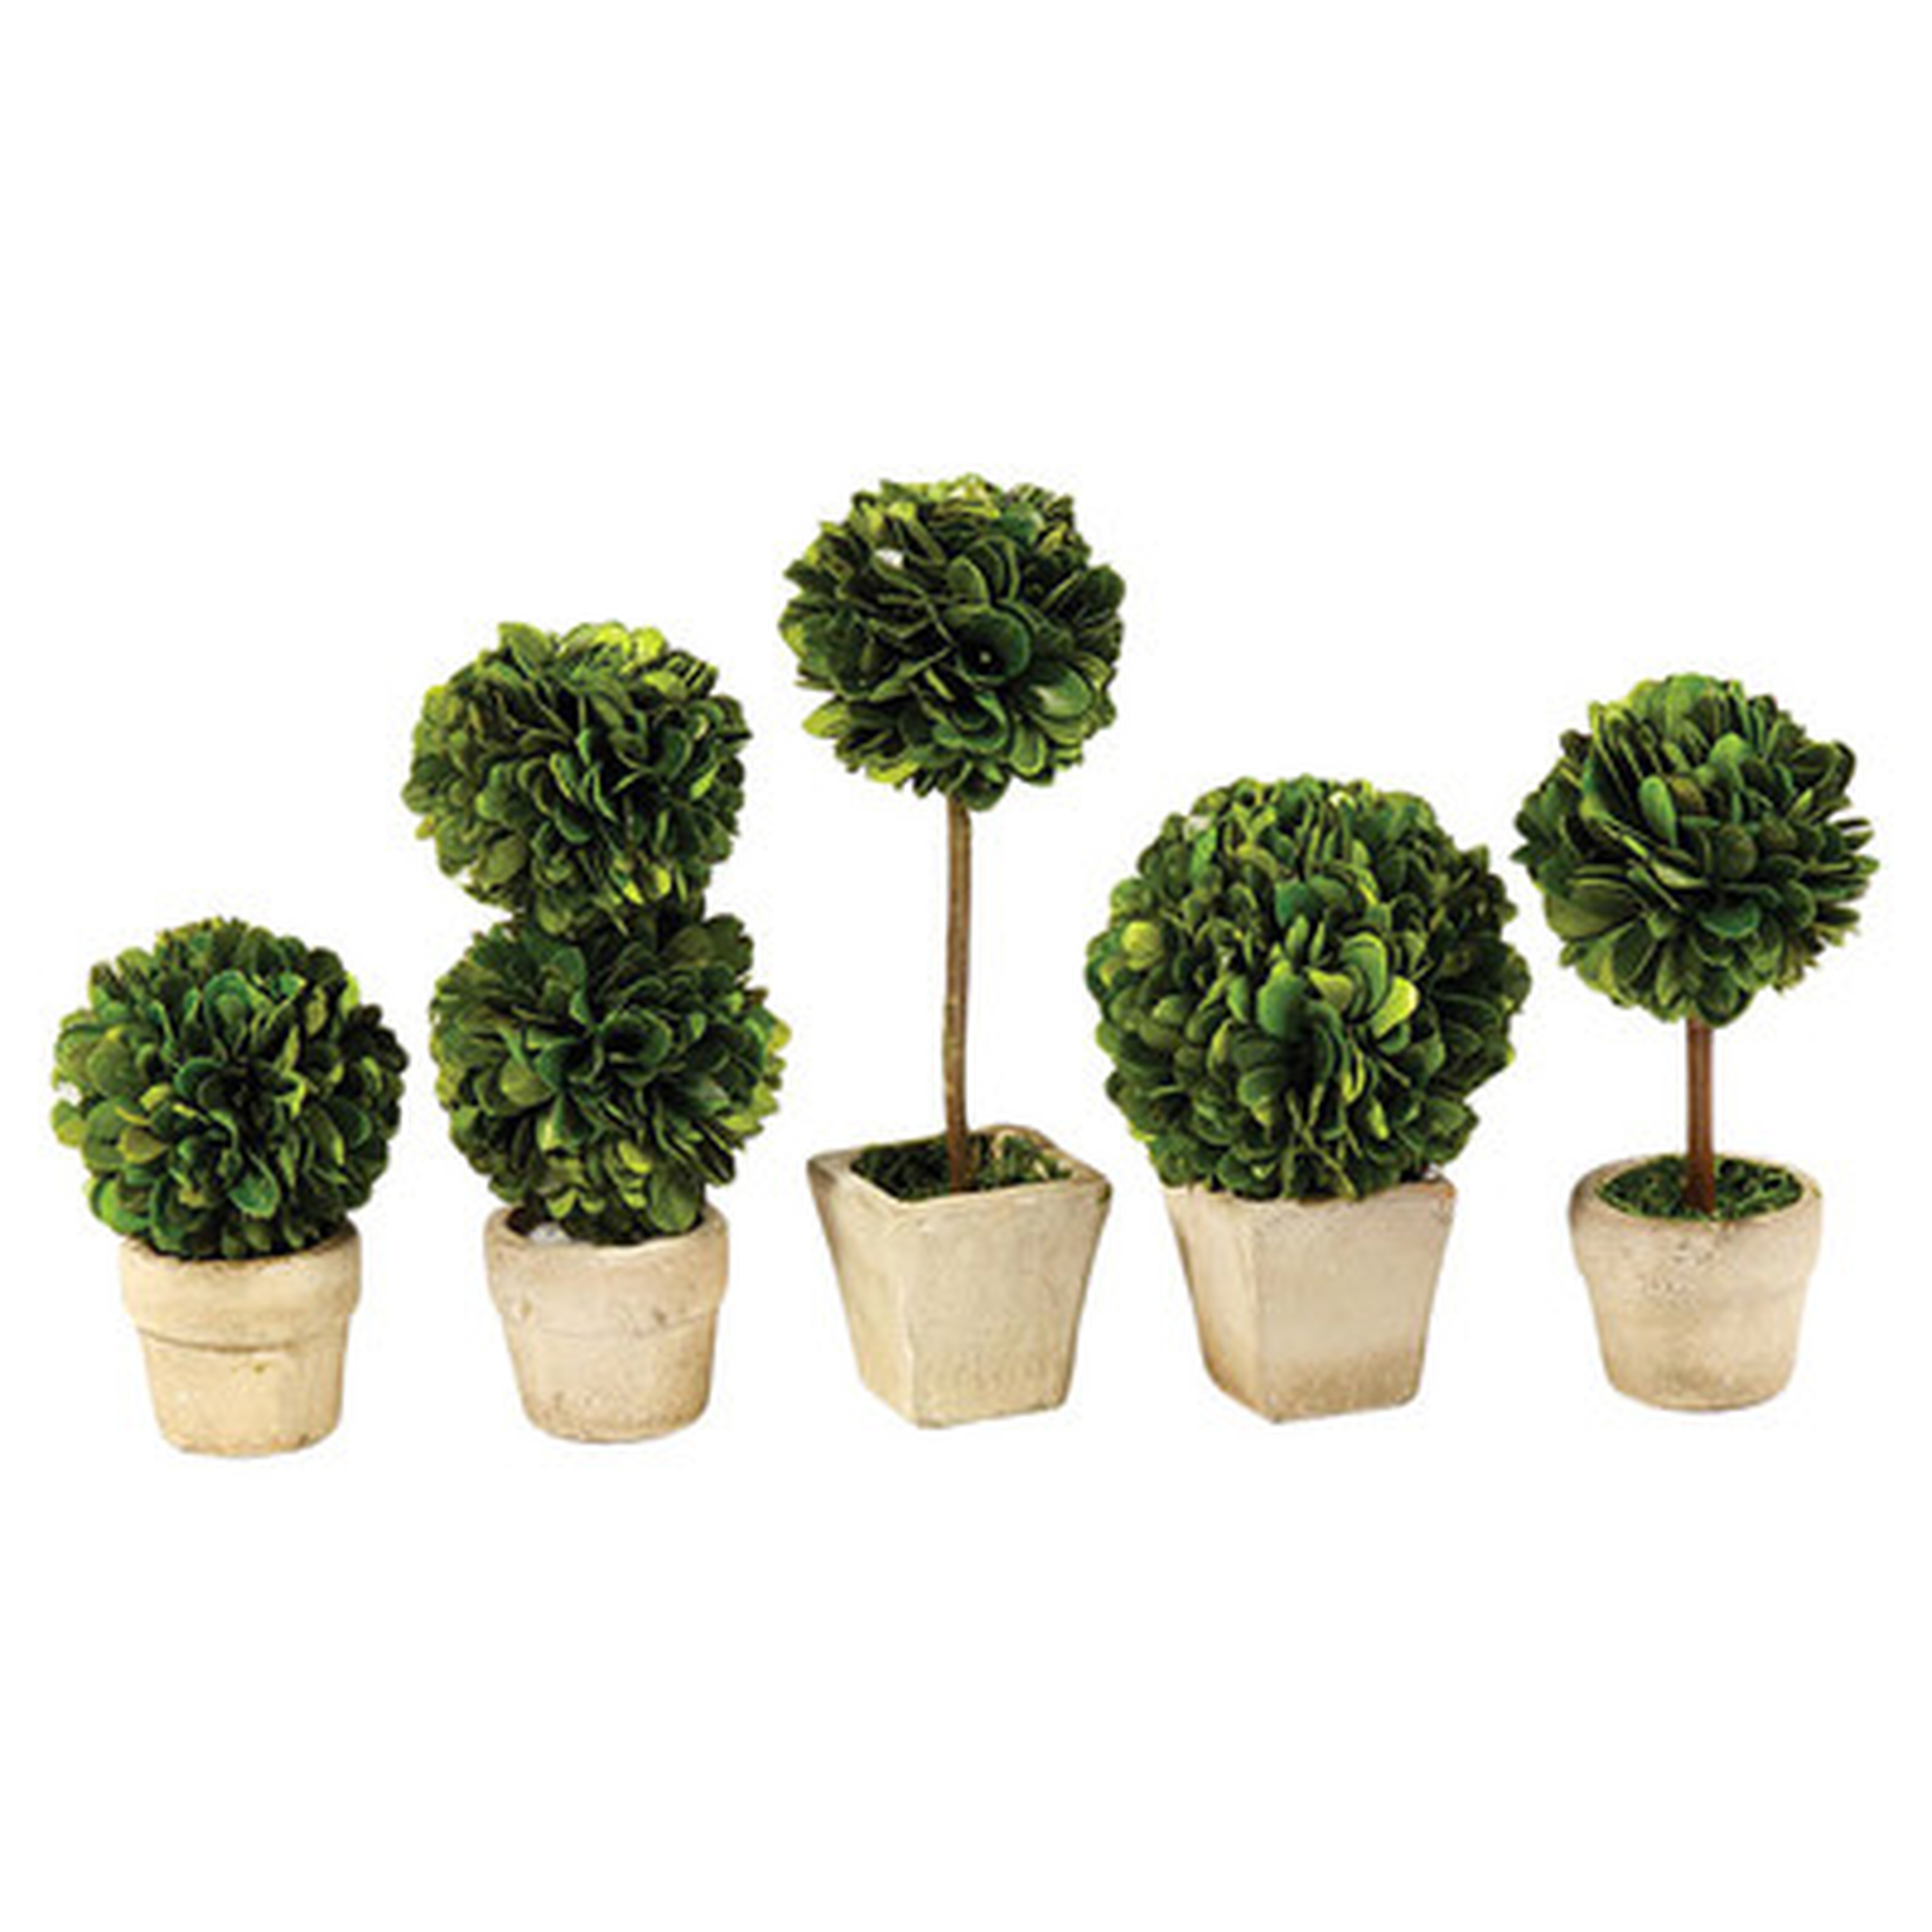 5 Piece Gaudreau Mini Boxwood Topiary in Pot Set - Birch Lane